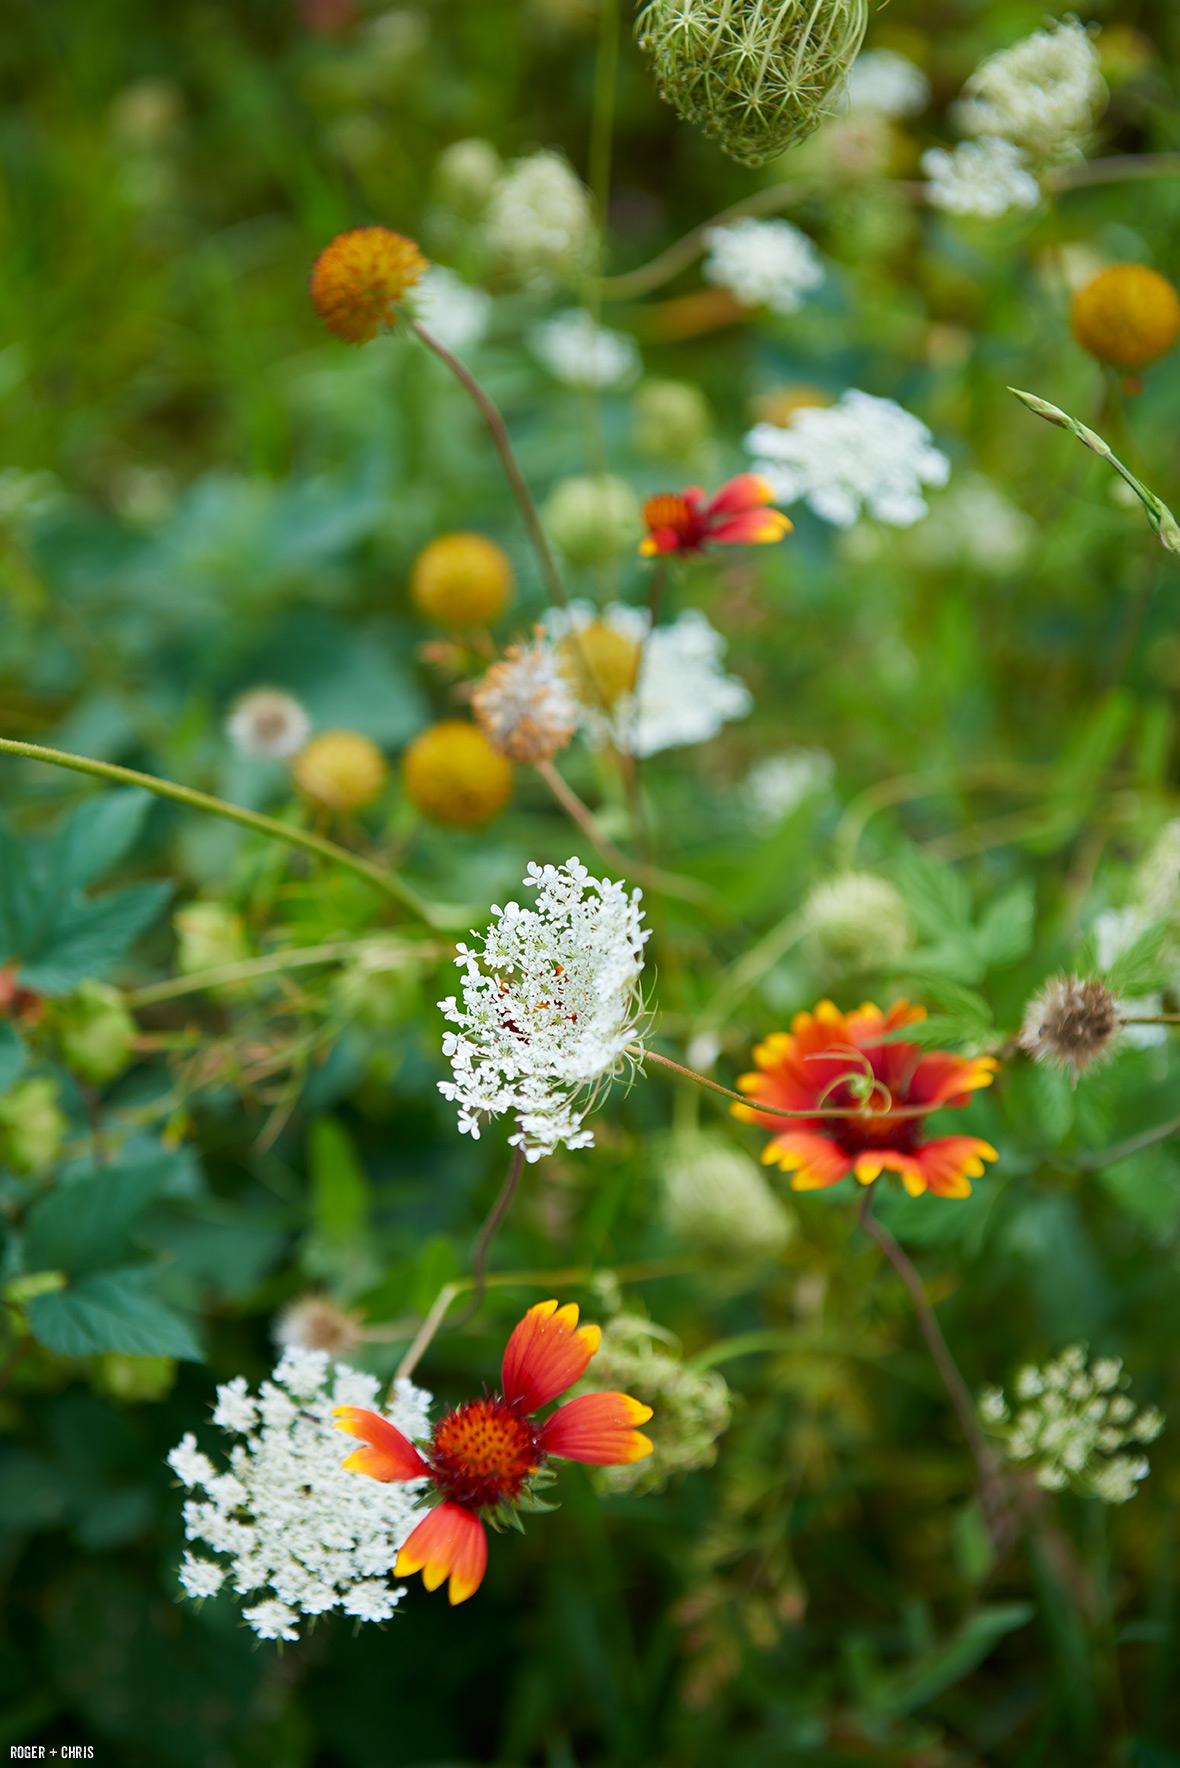 Wildflowers in the garden. Photo by Alec Hemer.